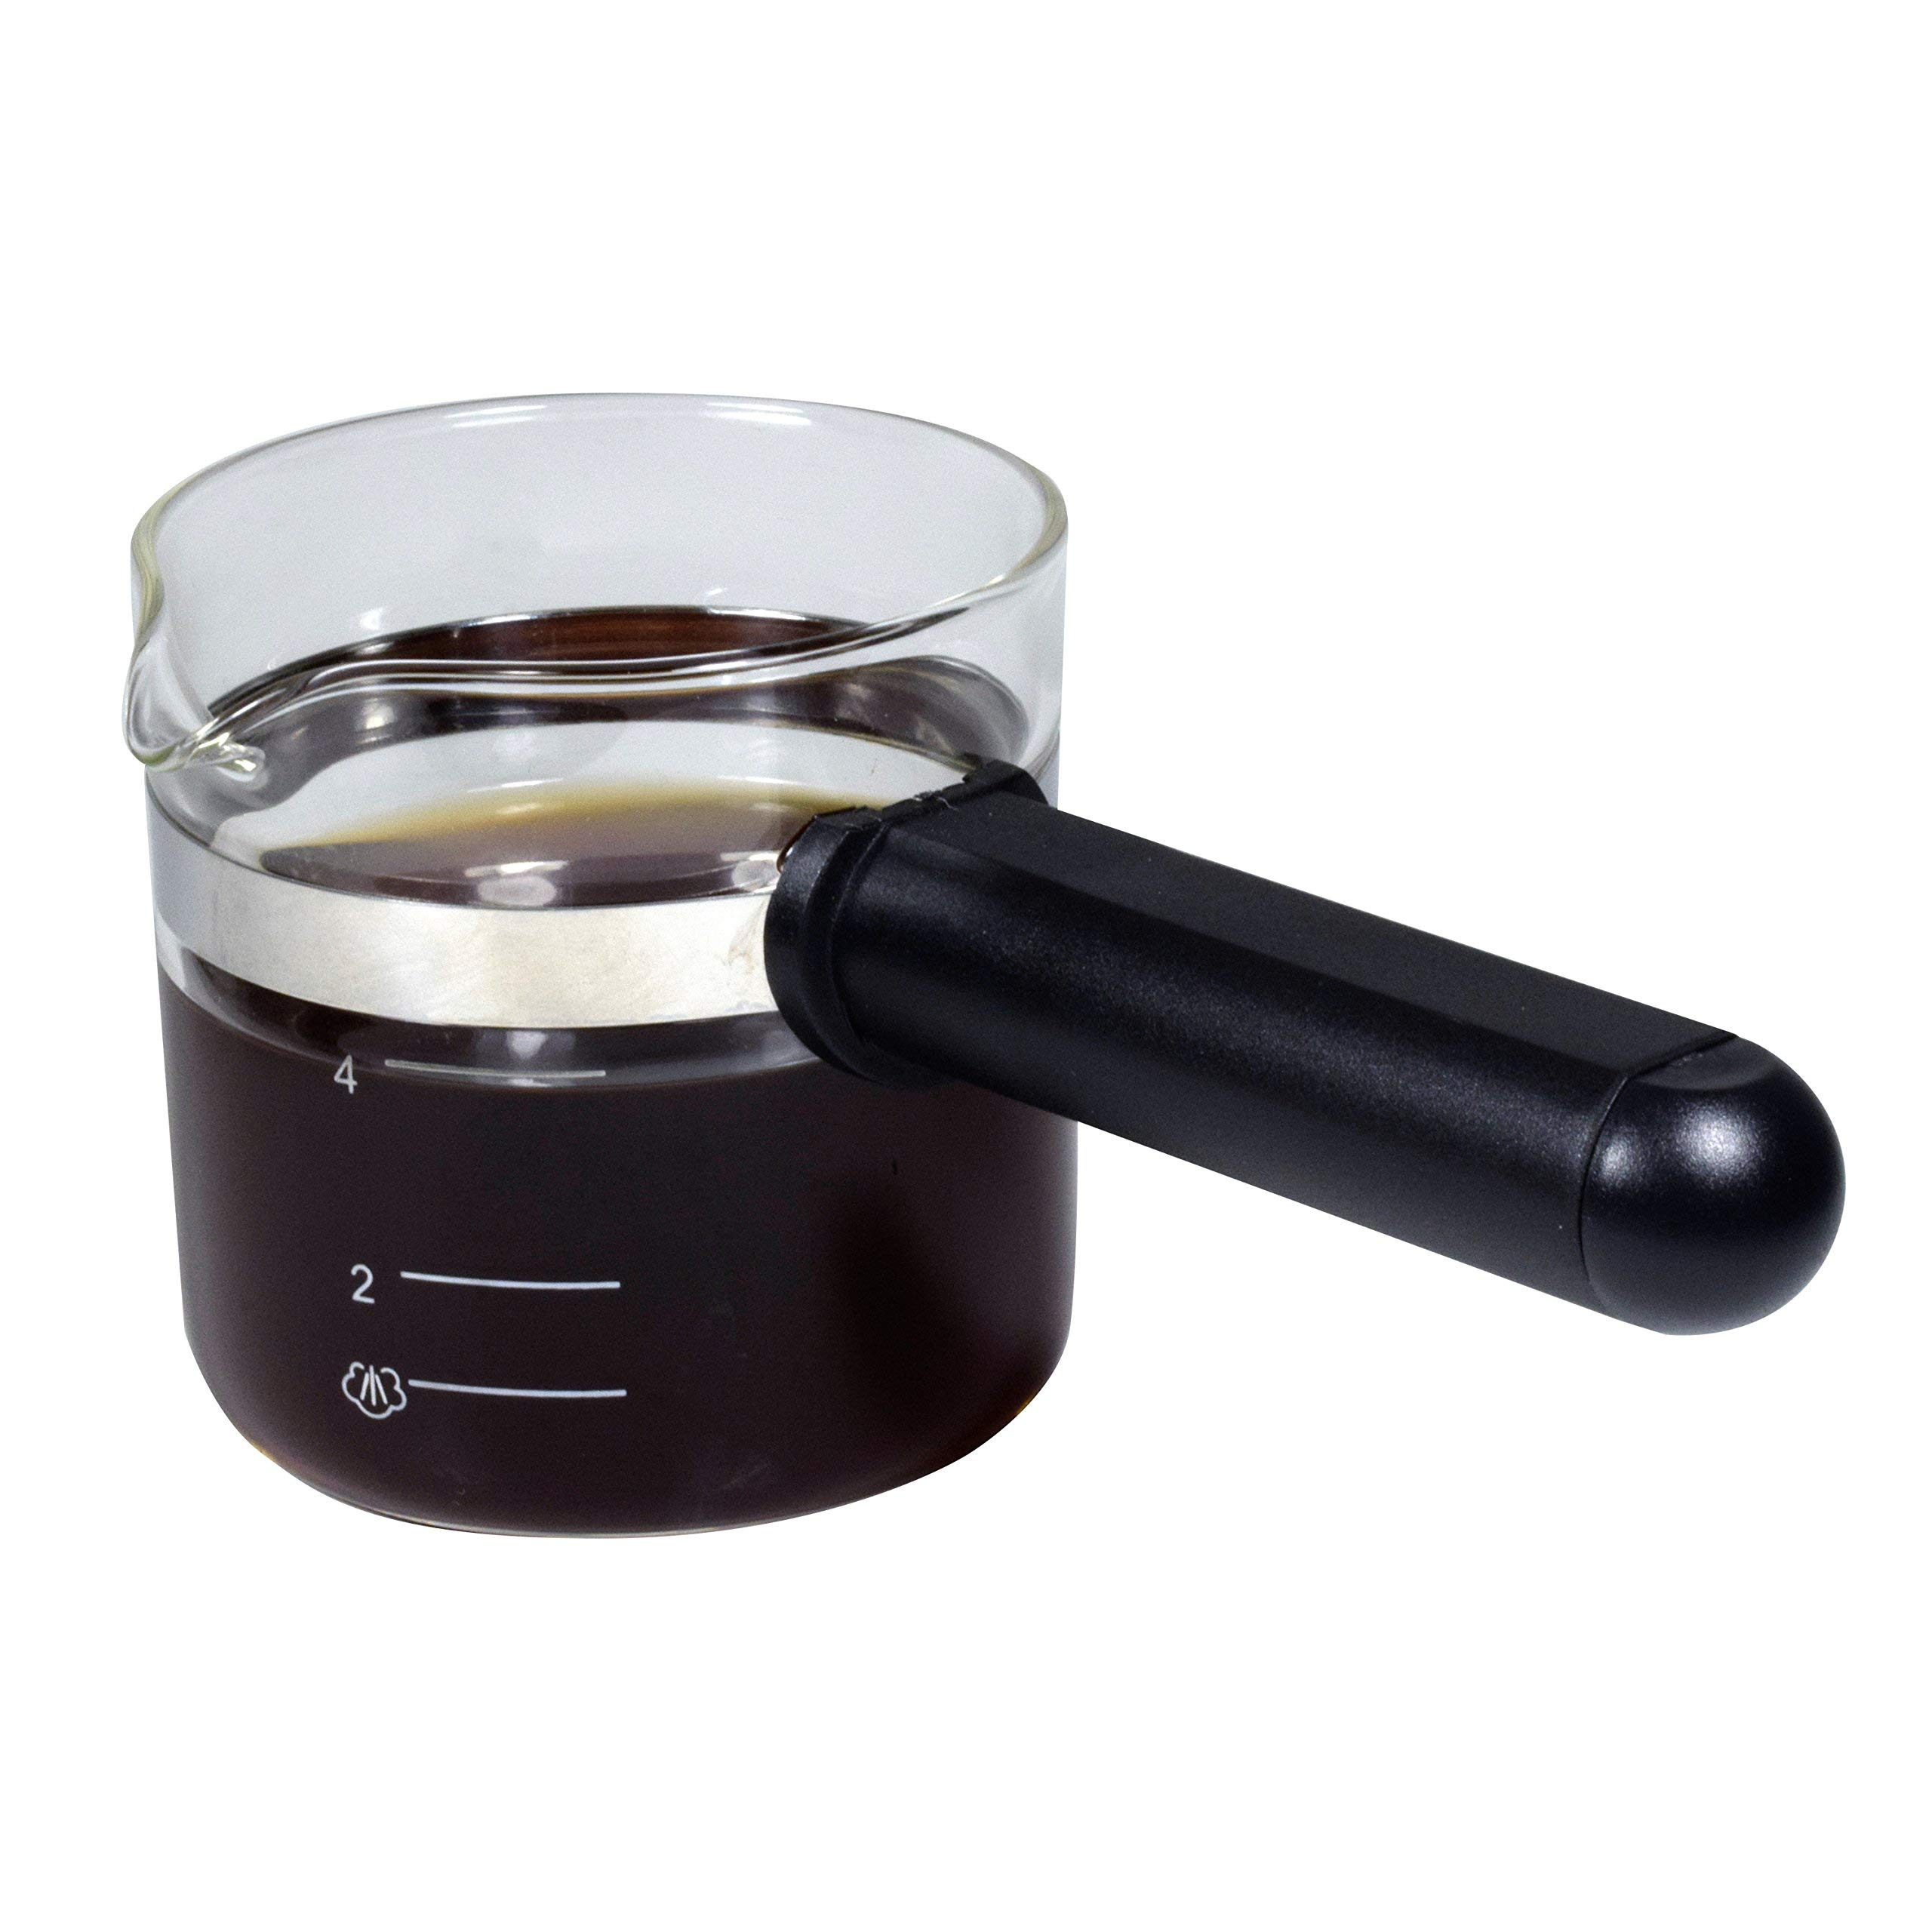 Univen Espresso Coffee Carafe Glass 4 Cup Universal fits Mr. Coffee, Krups, Salton, DeLonghi, etc.